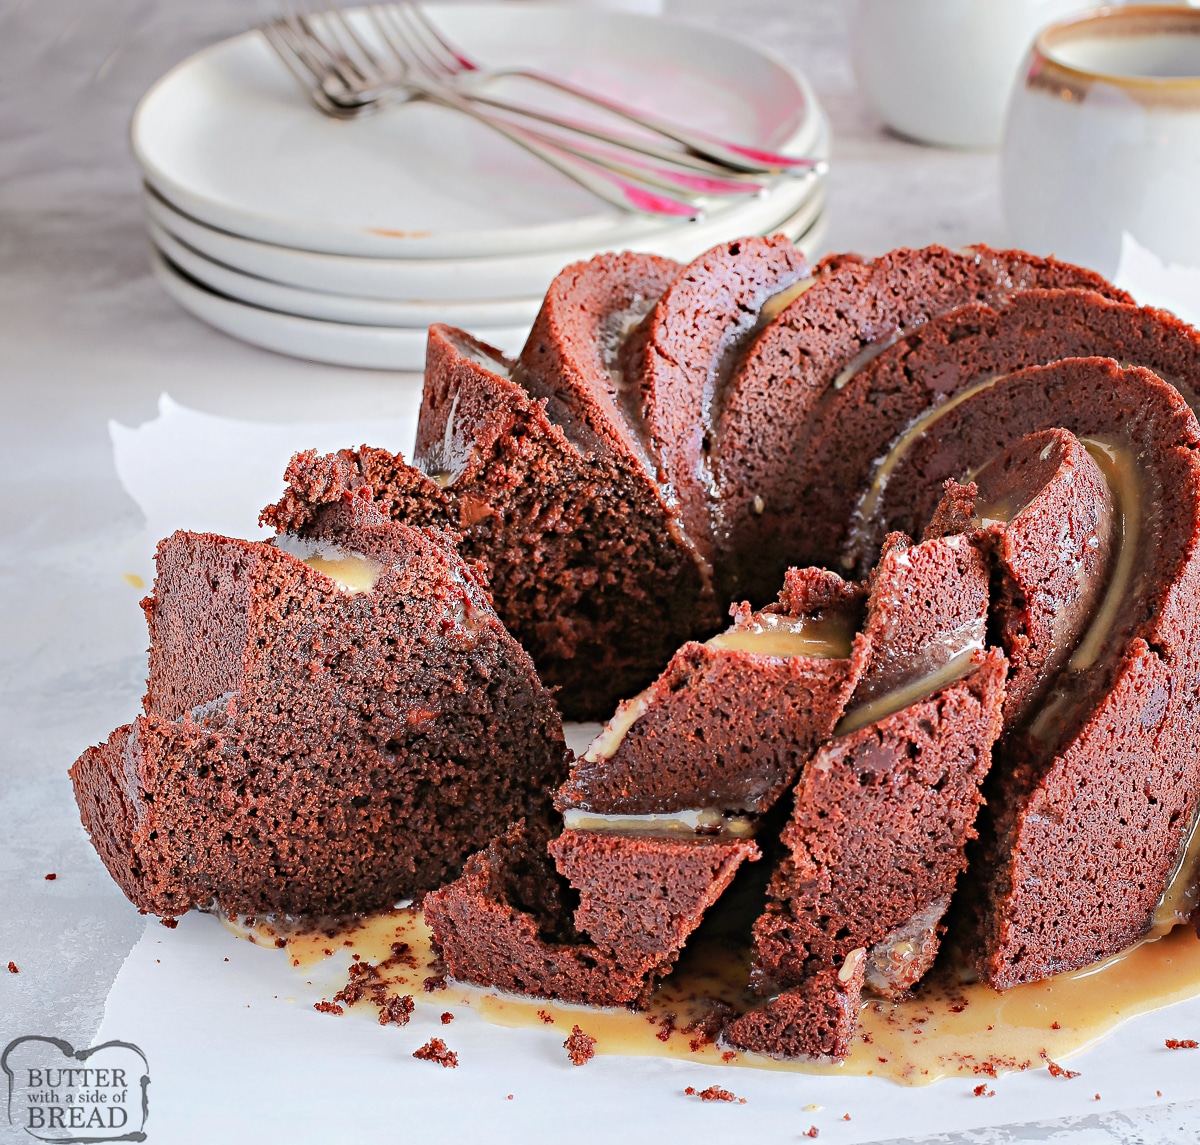 slices of chocolate bundt cake